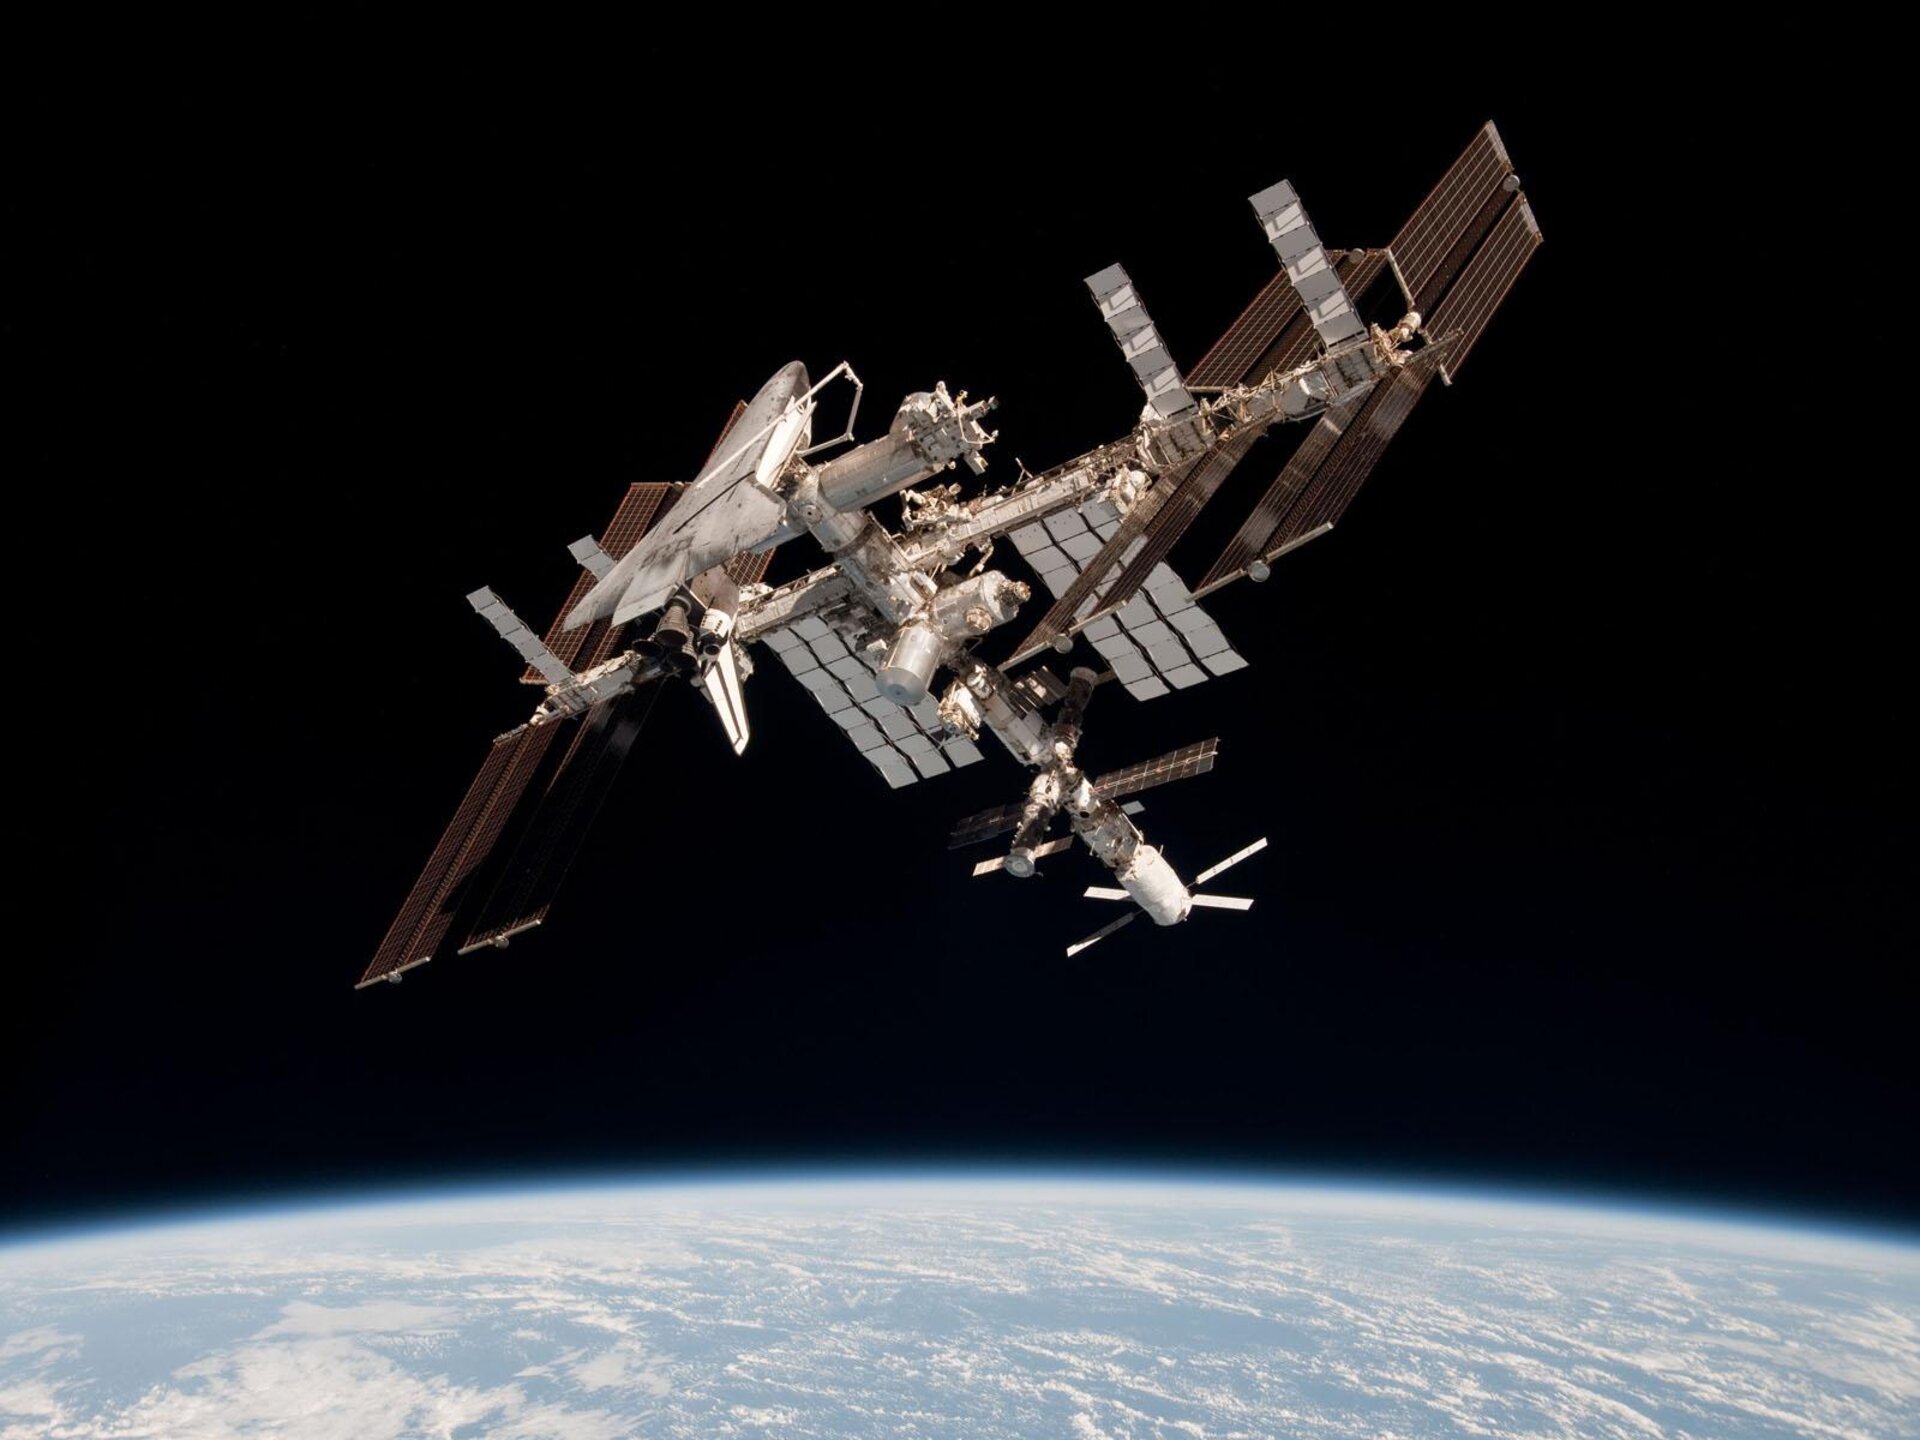 ISS with ATV Johannes Kepler and Shuttle Endeavour docked